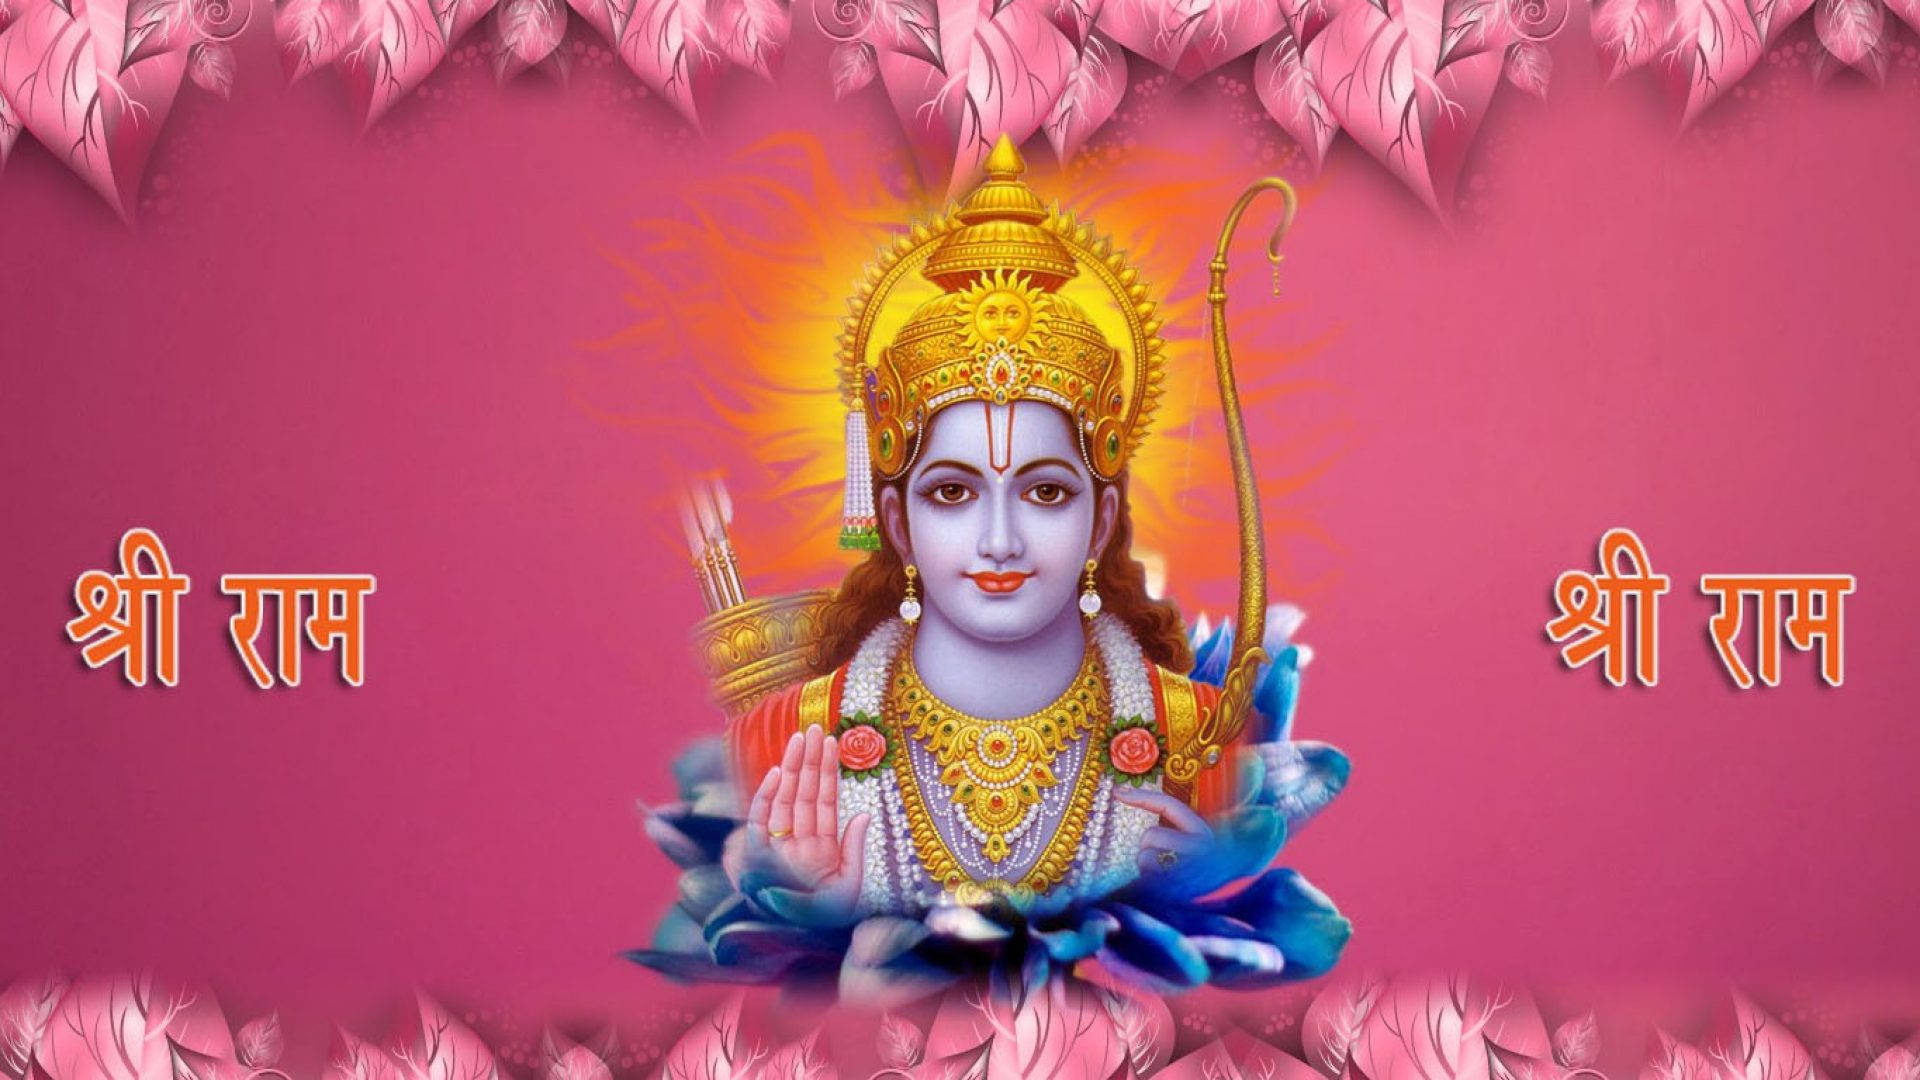 Hindu God Ram Ji In Pink